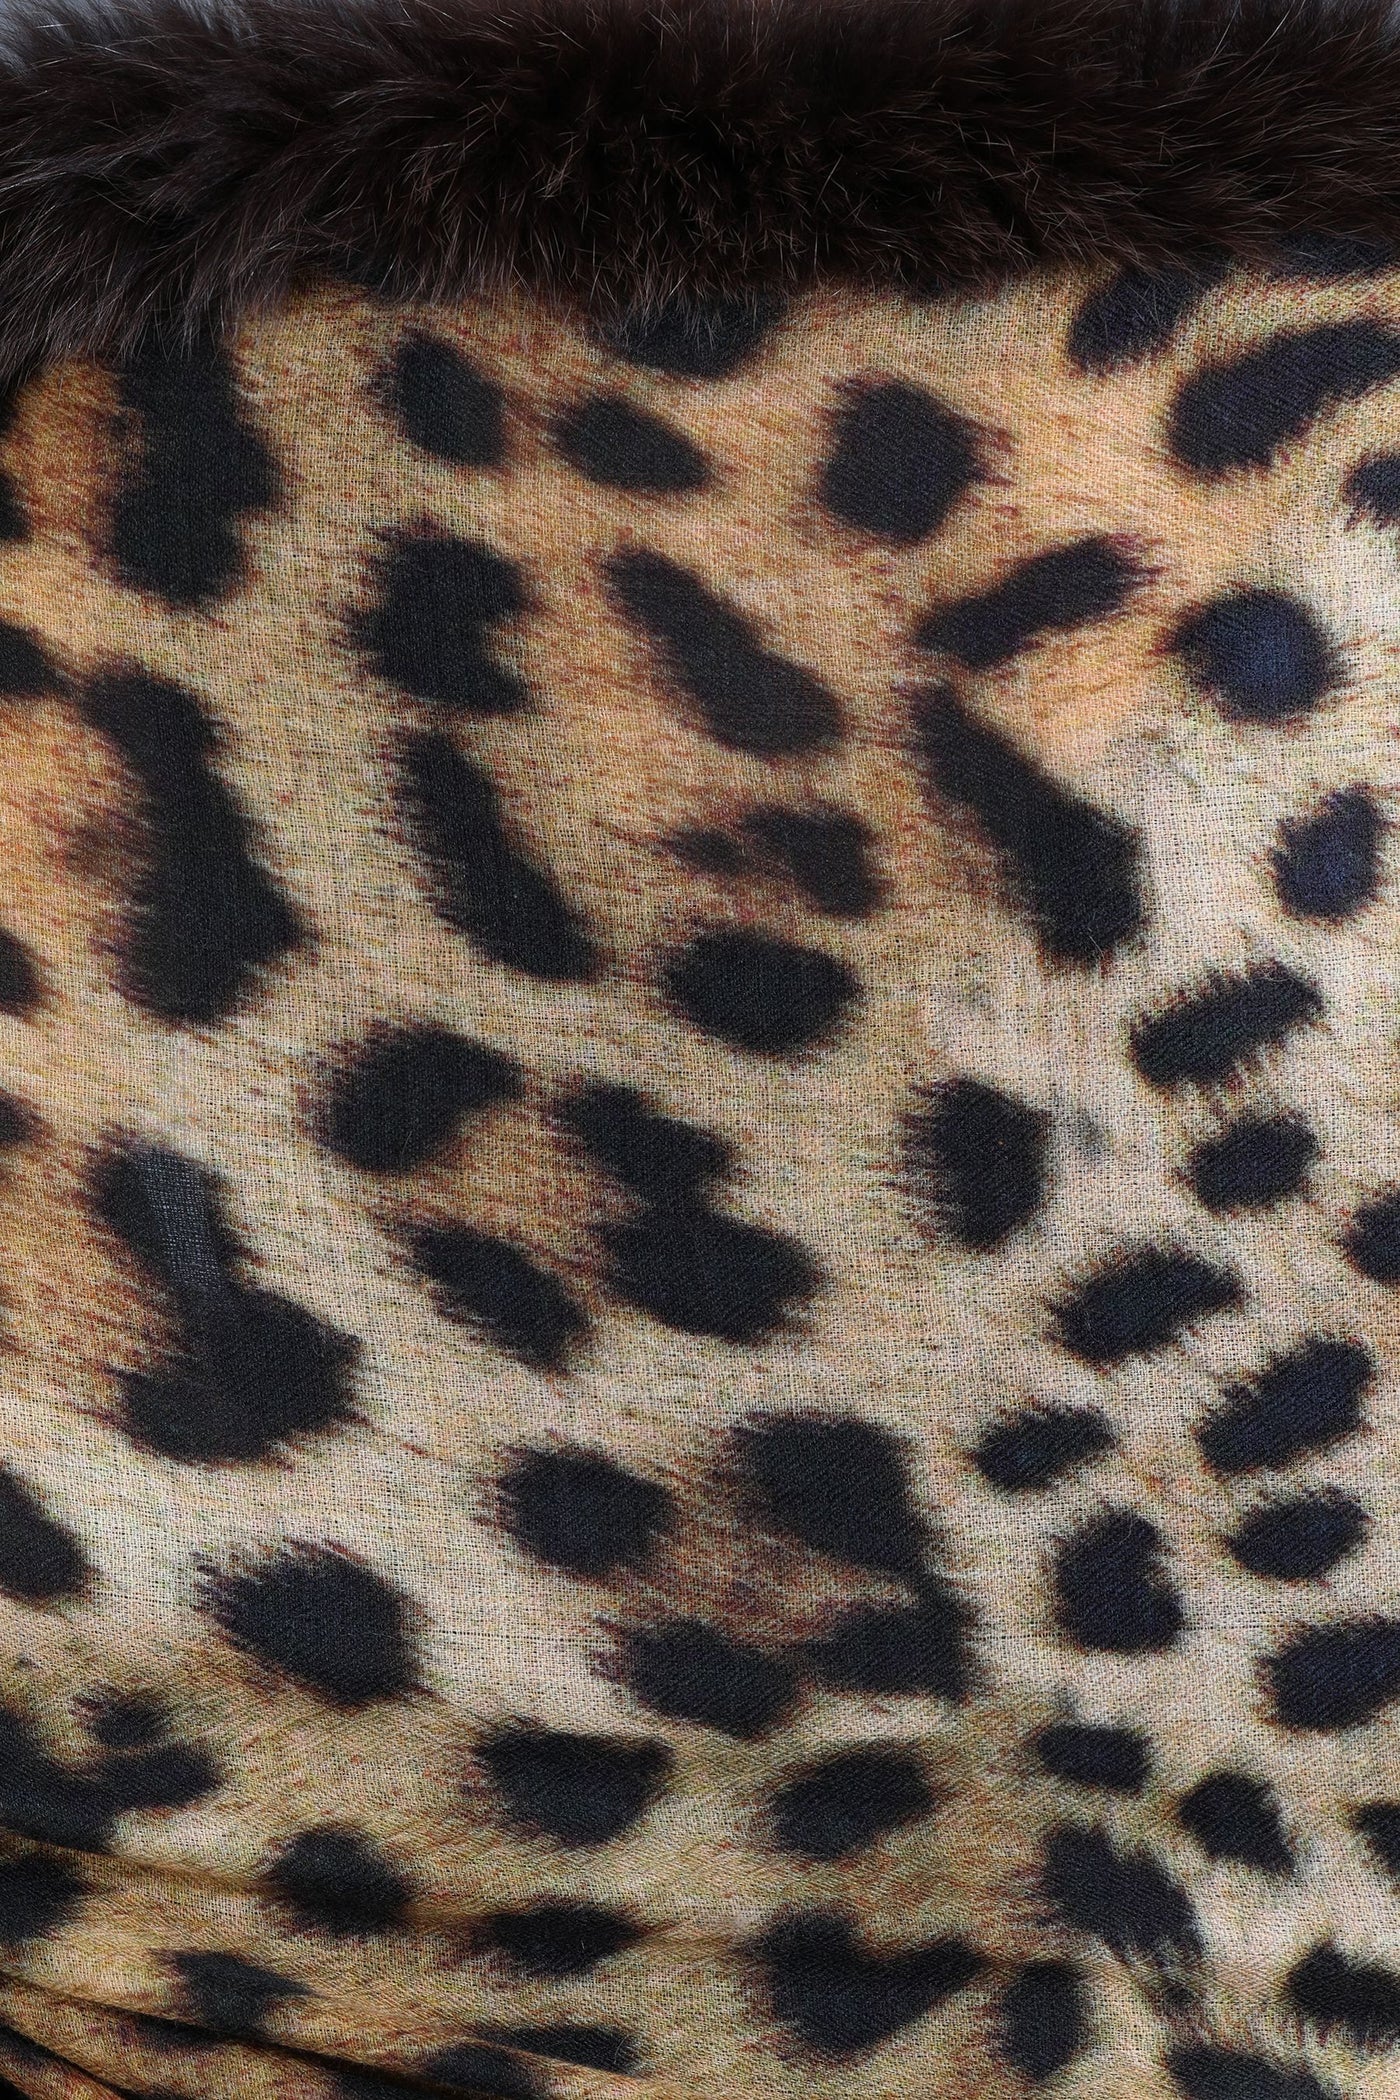 Cashmere Digital Animal Print With High Quality Fur